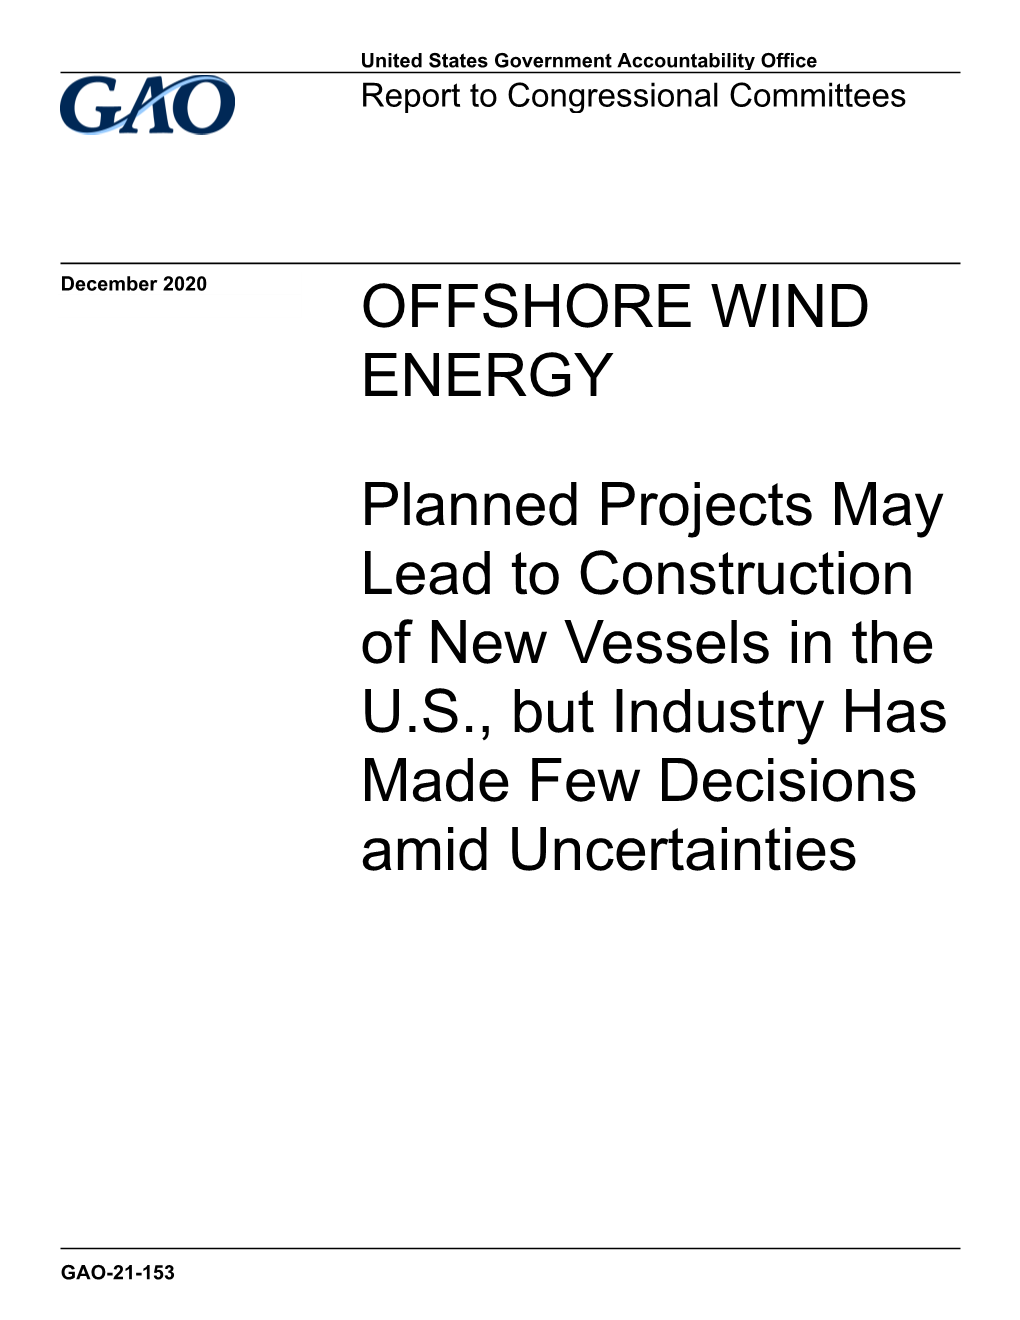 Gao-21-153, Offshore Wind Energy